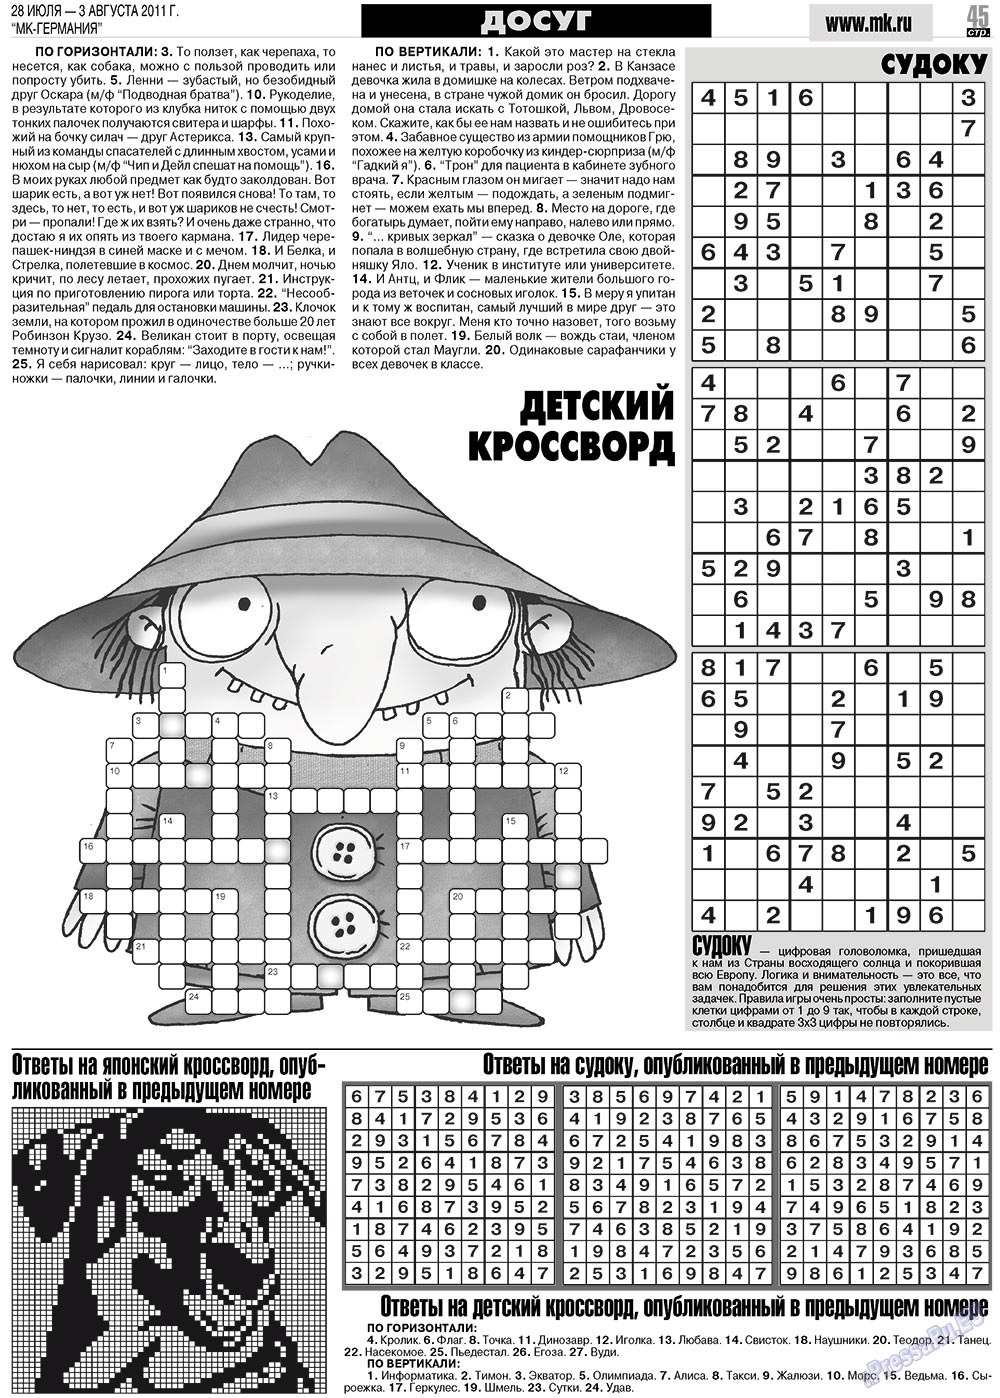 МК-Германия, газета. 2011 №30 стр.45